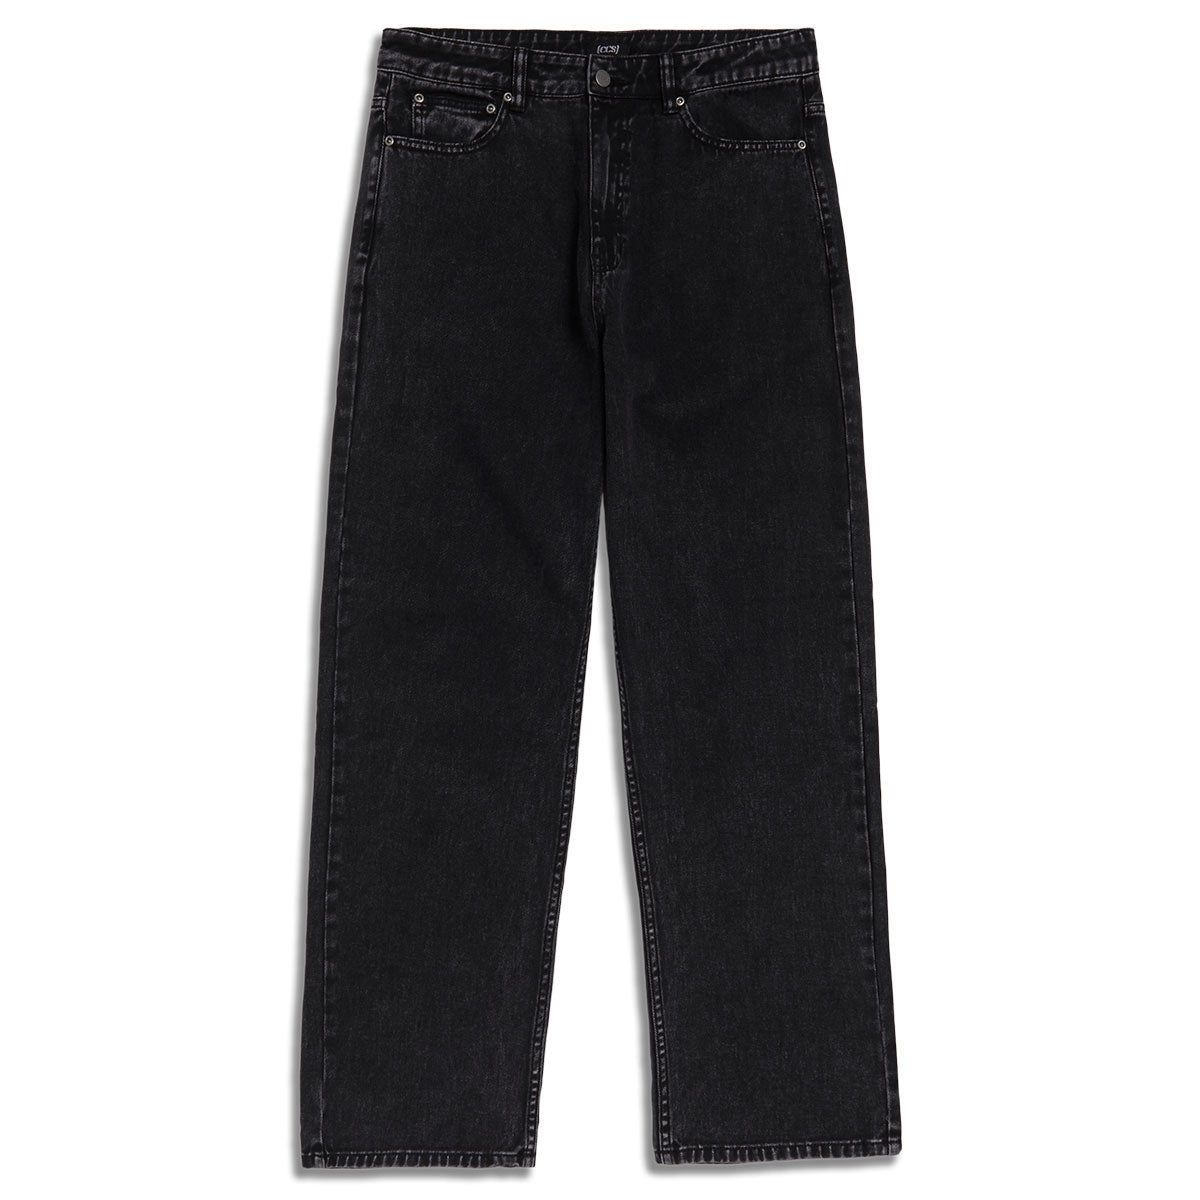 CCS Original Relaxed Denim Jeans - Acid Wash Black image 5